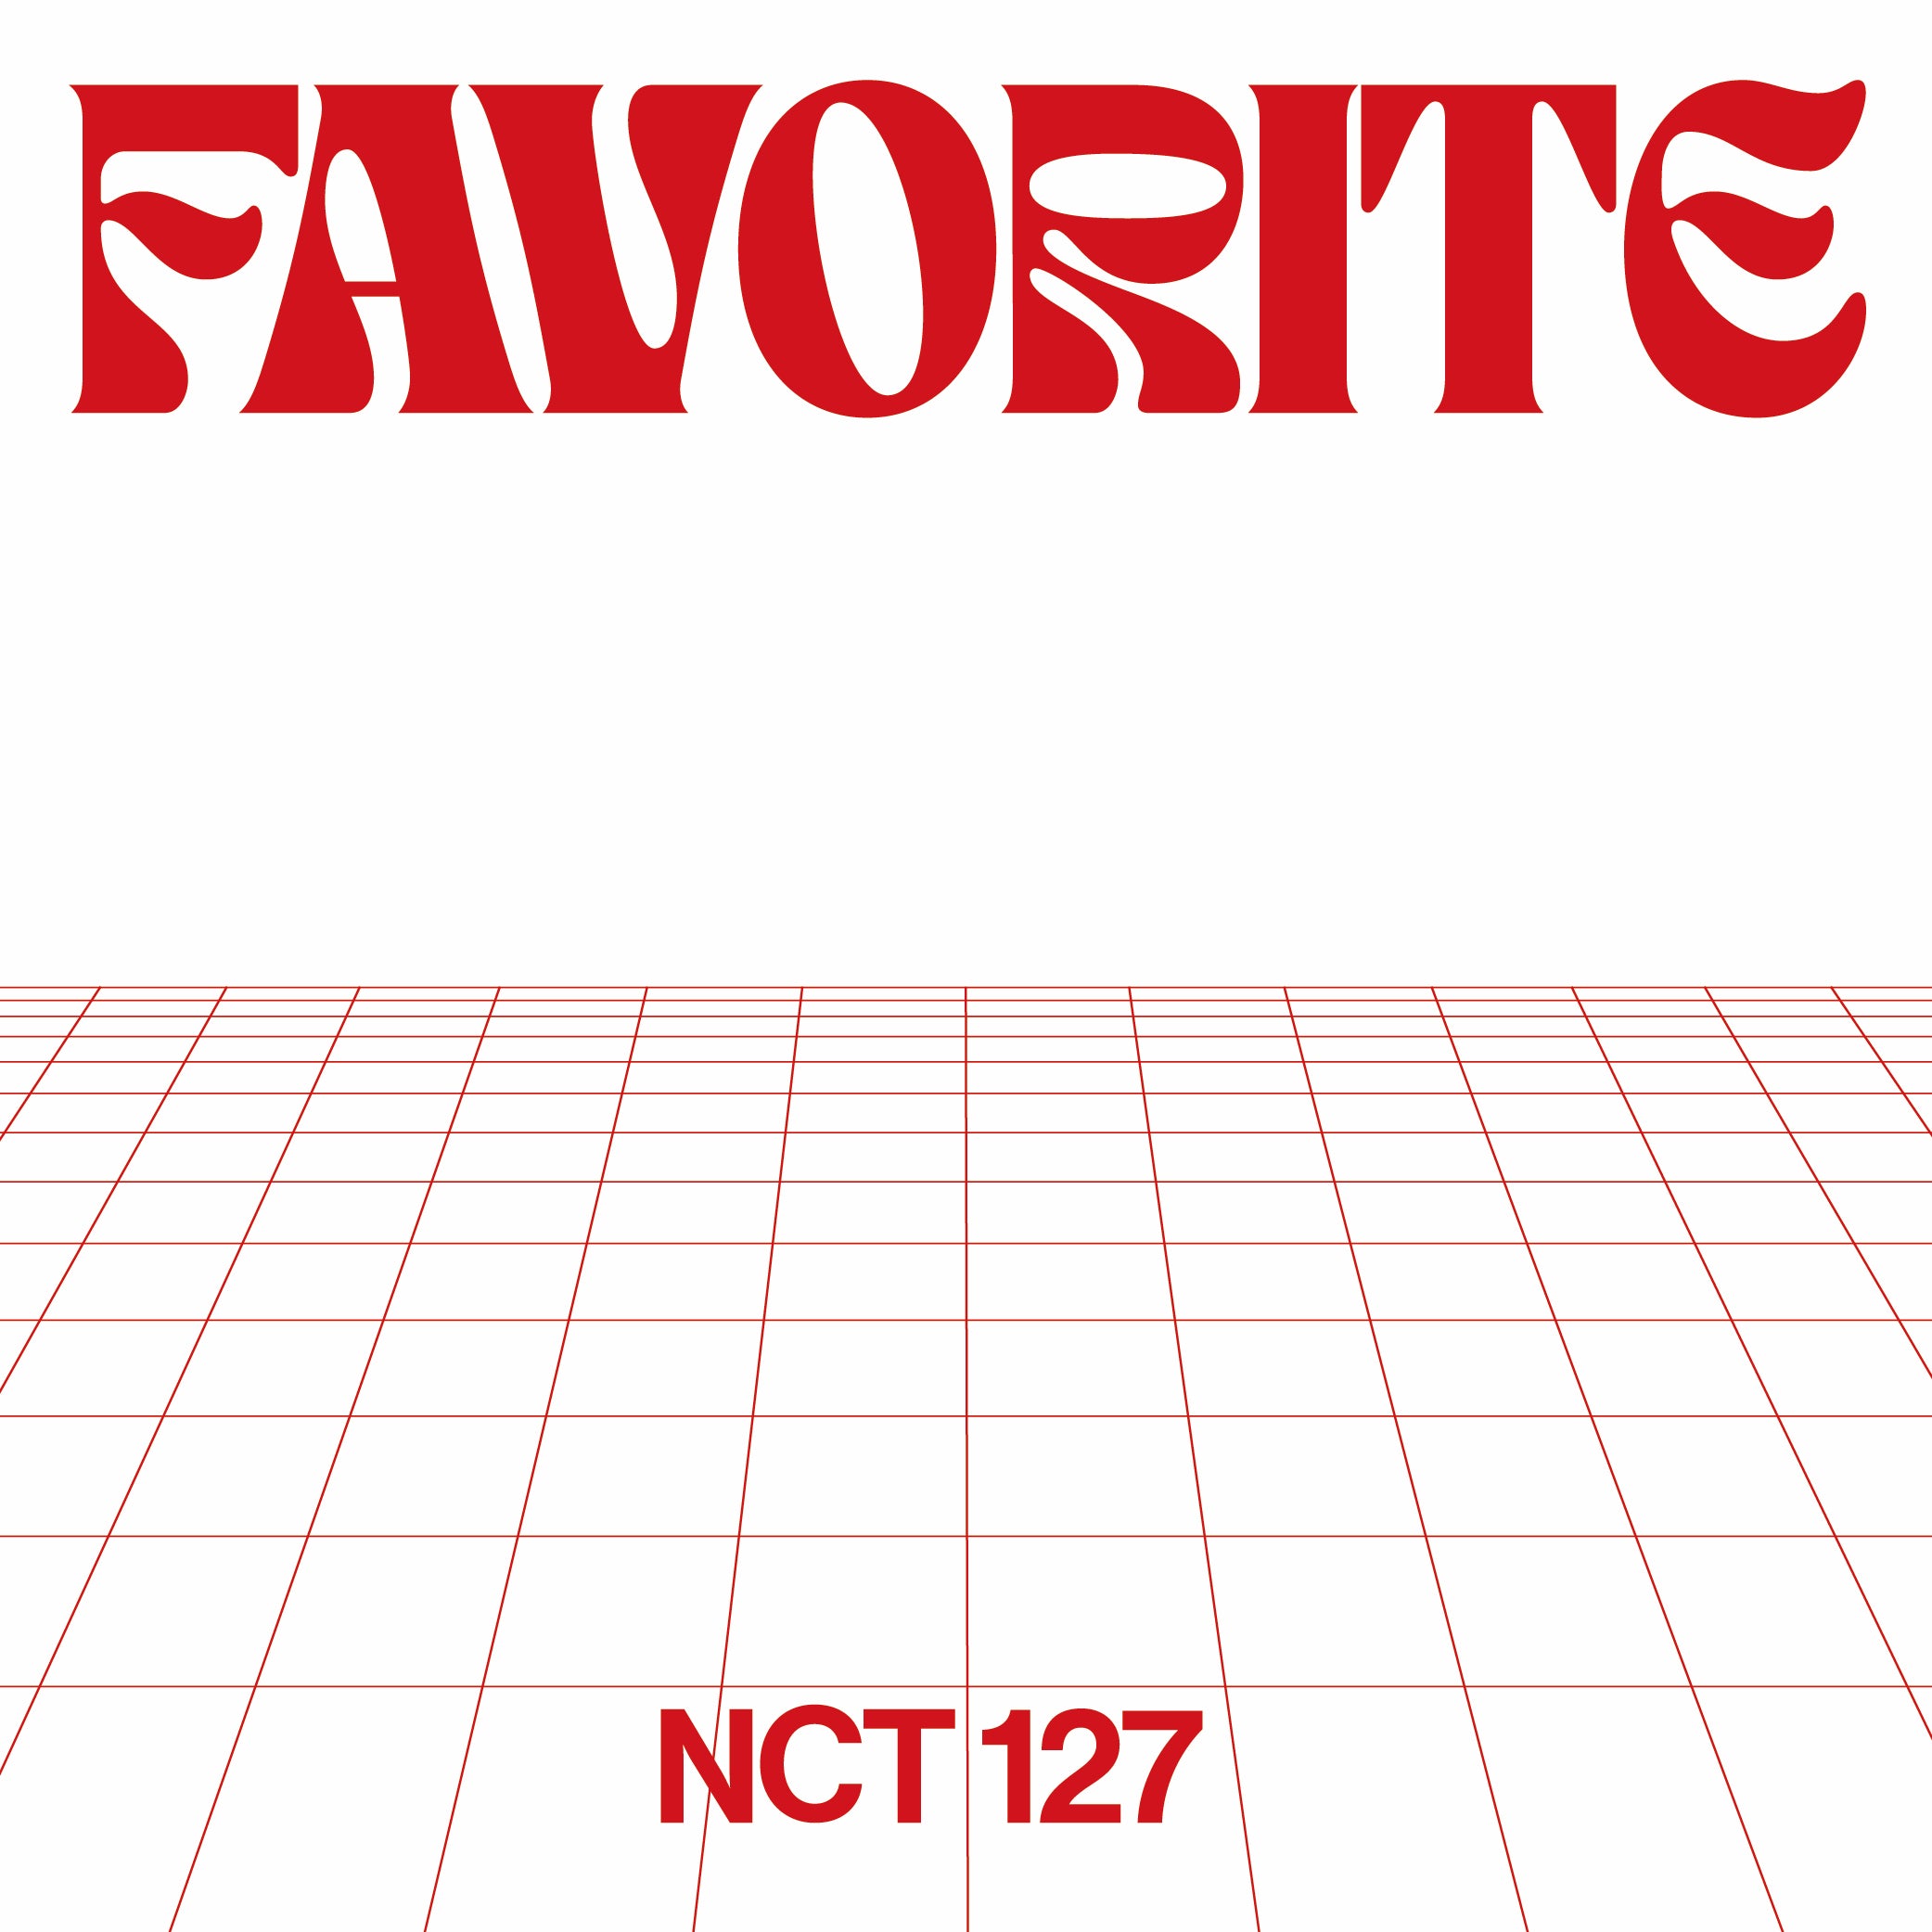 NCT 127 - Favorite - KSHOPINA